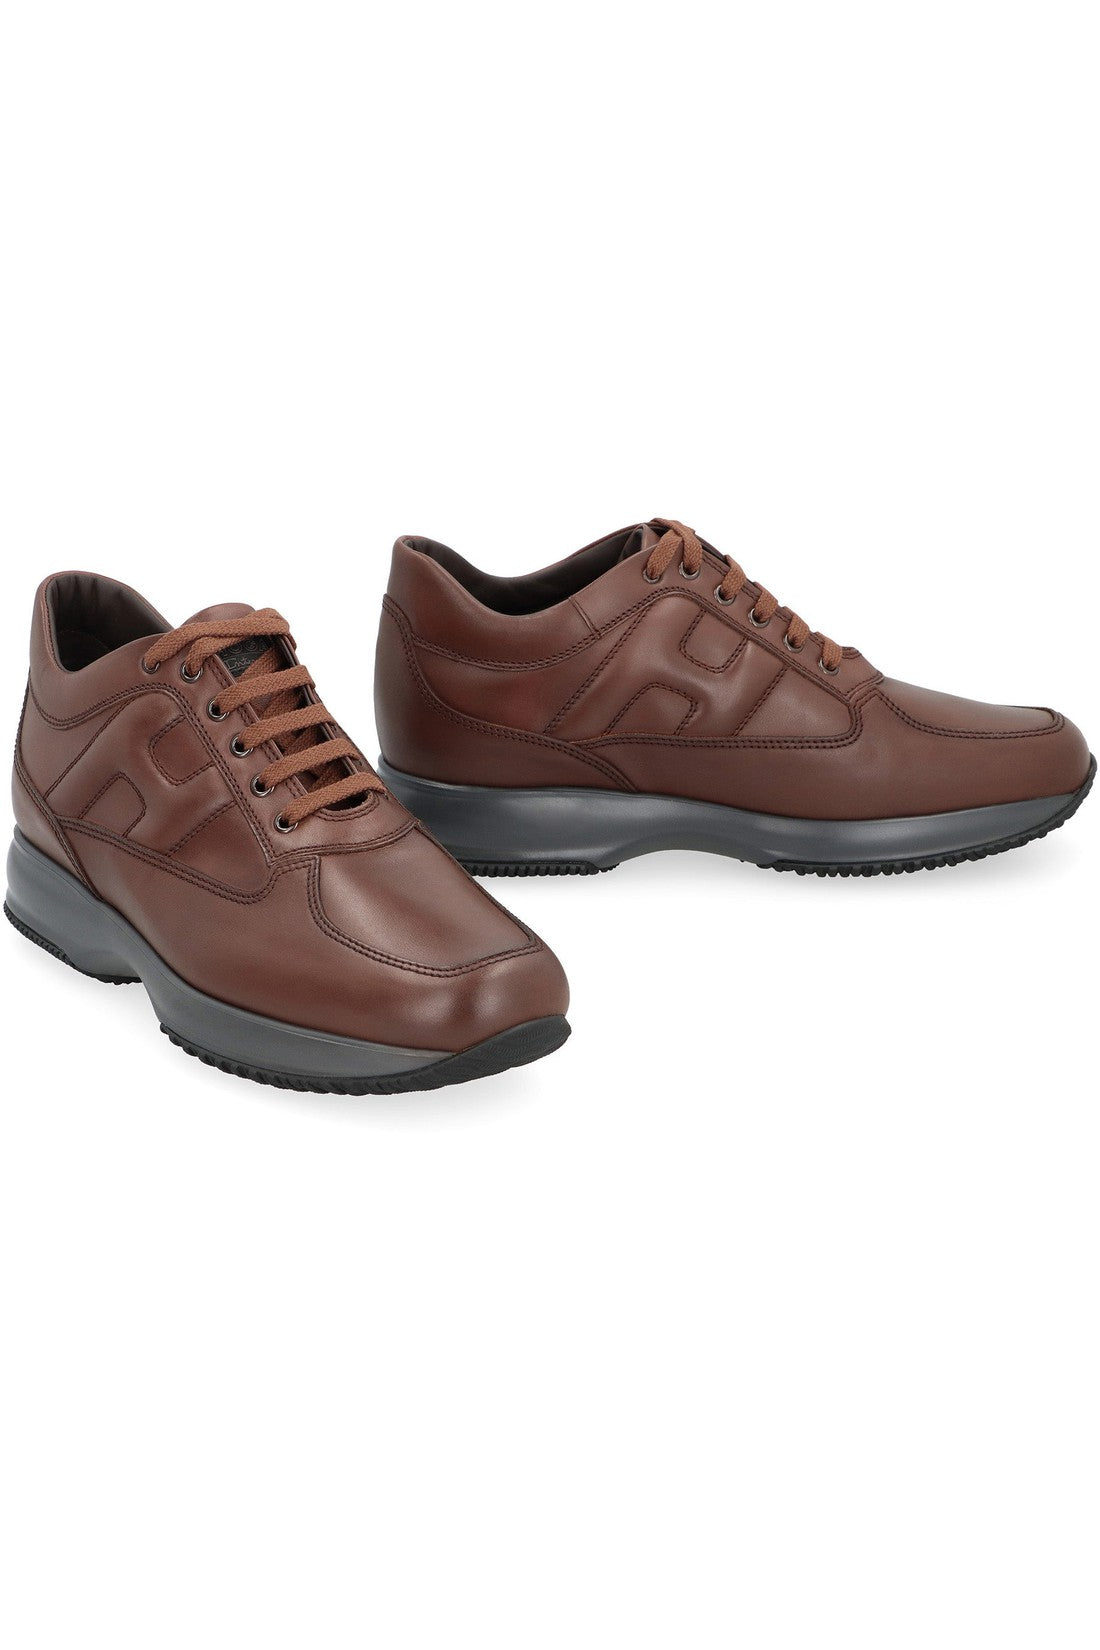 Hogan-OUTLET-SALE-Hogan Interactive leather low-top sneakers-ARCHIVIST